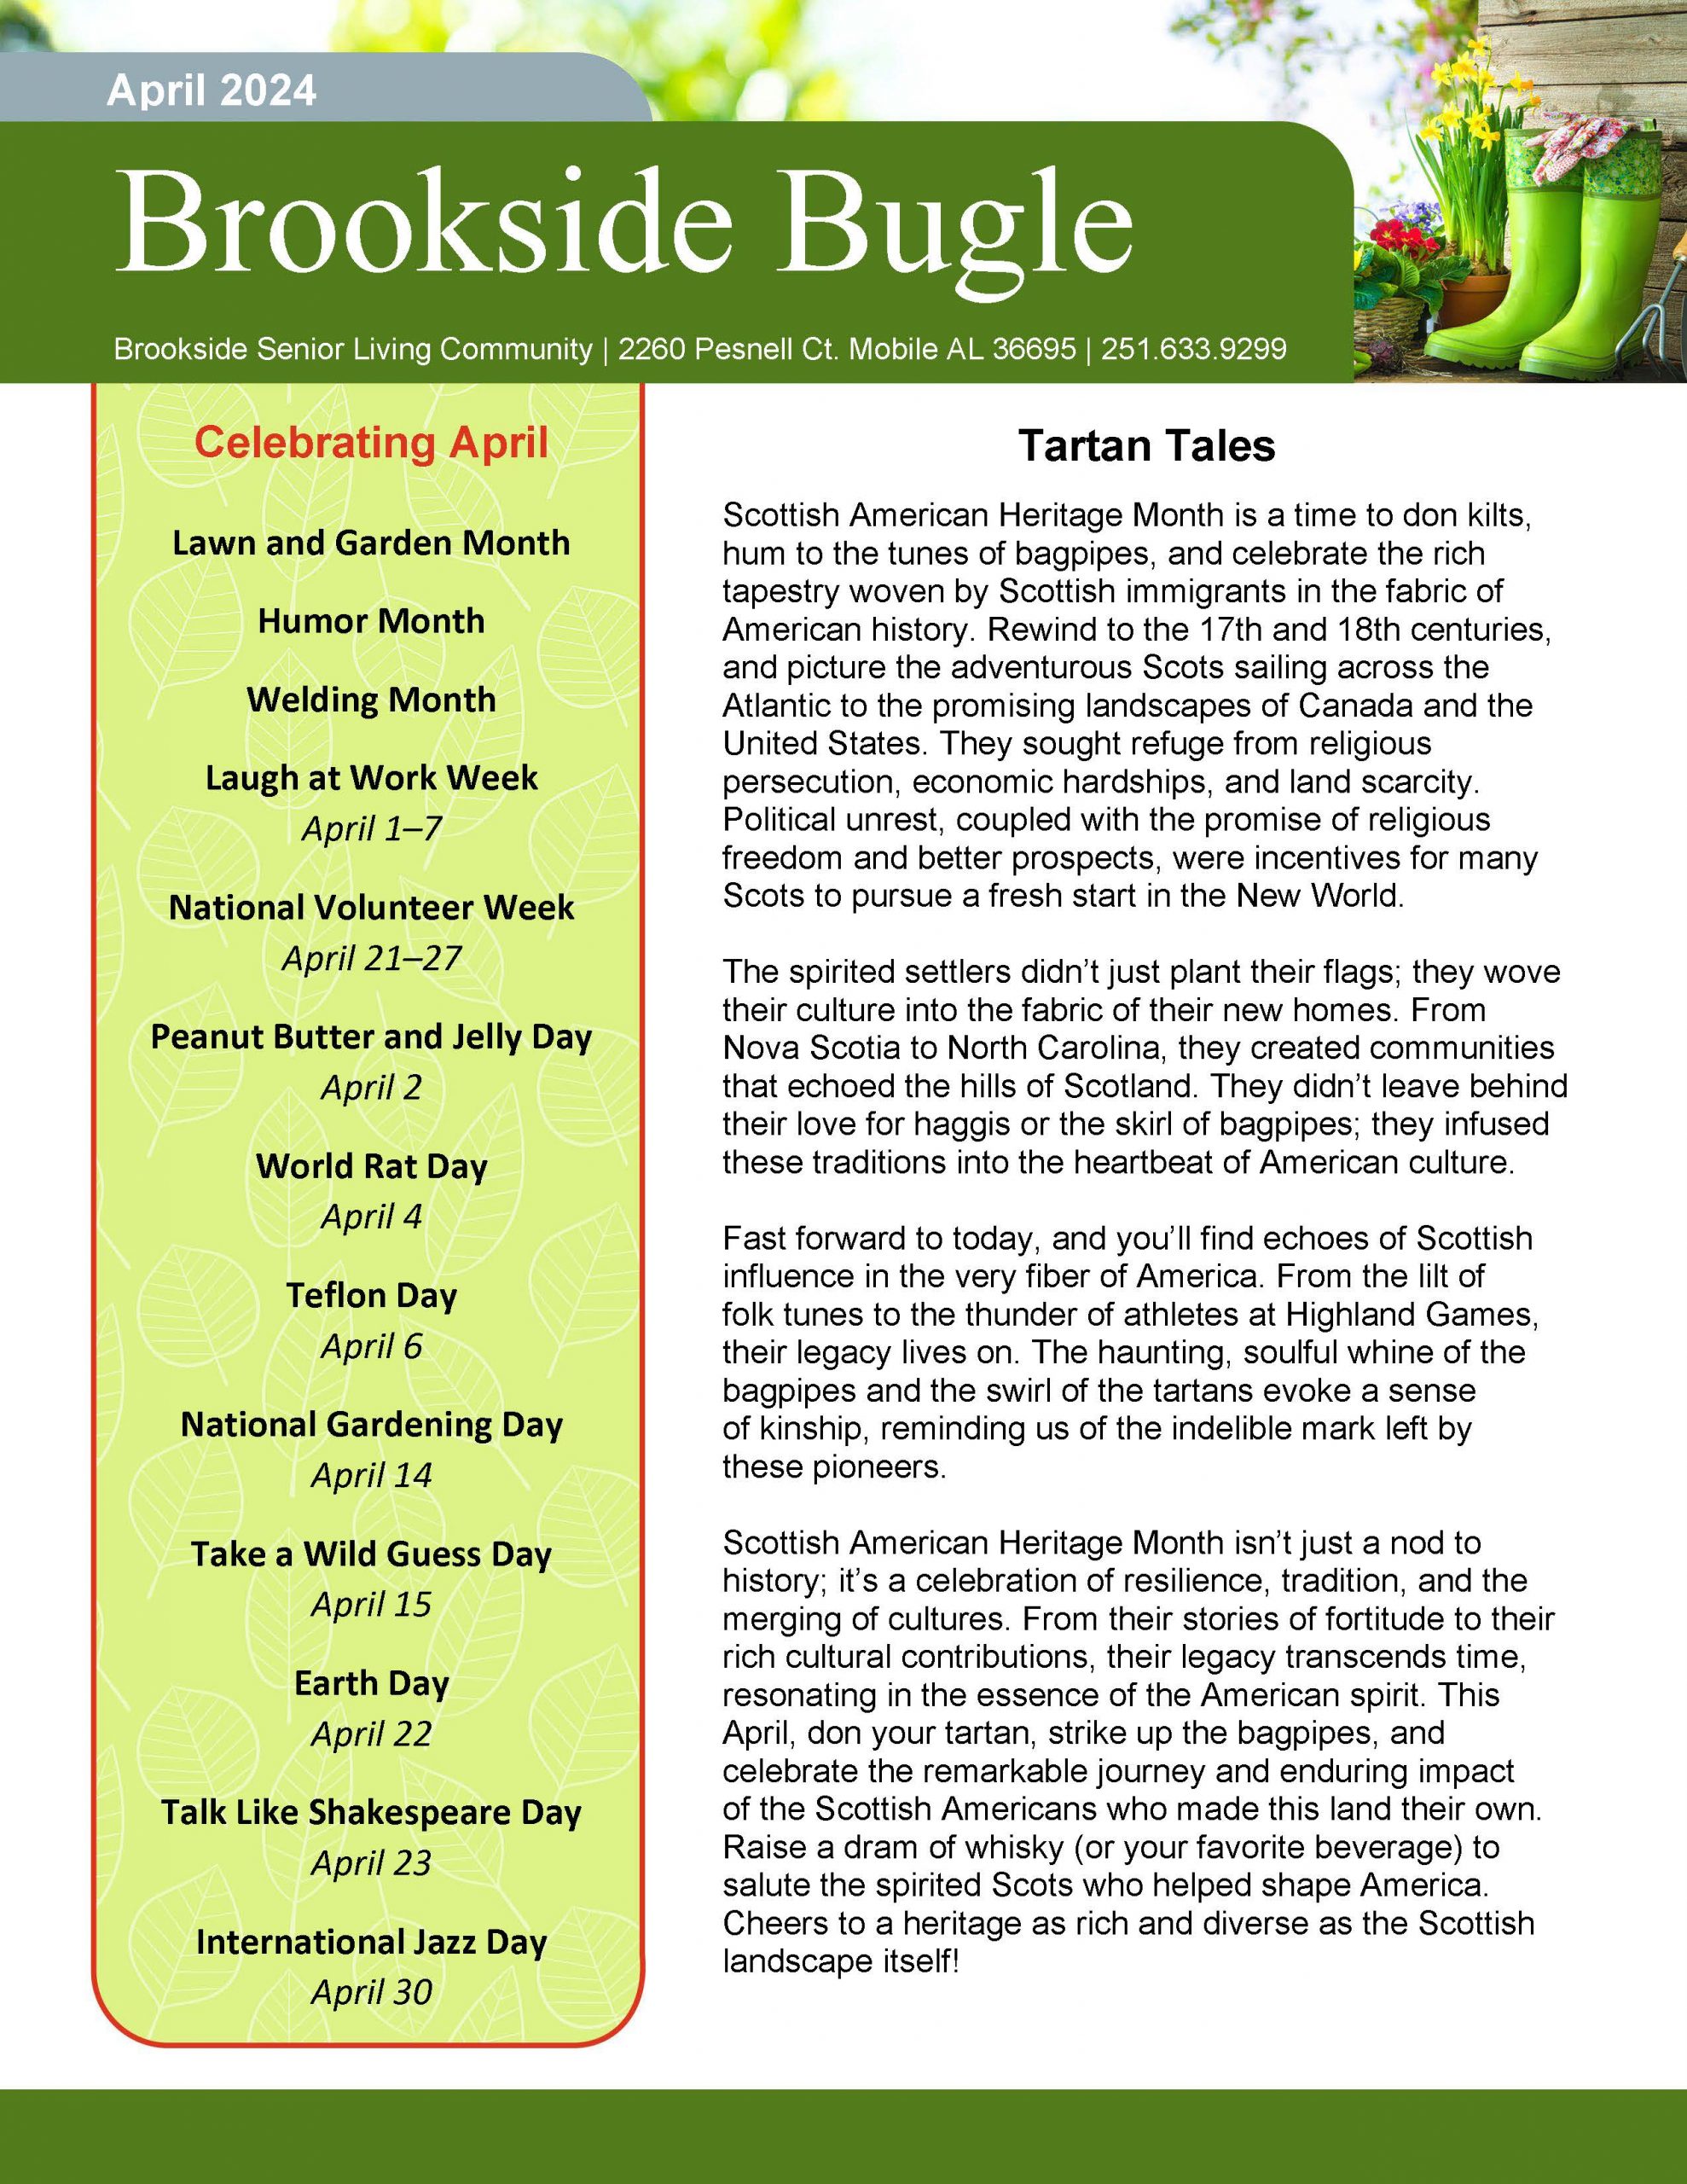 Brookside Senior Living Activity Calendar